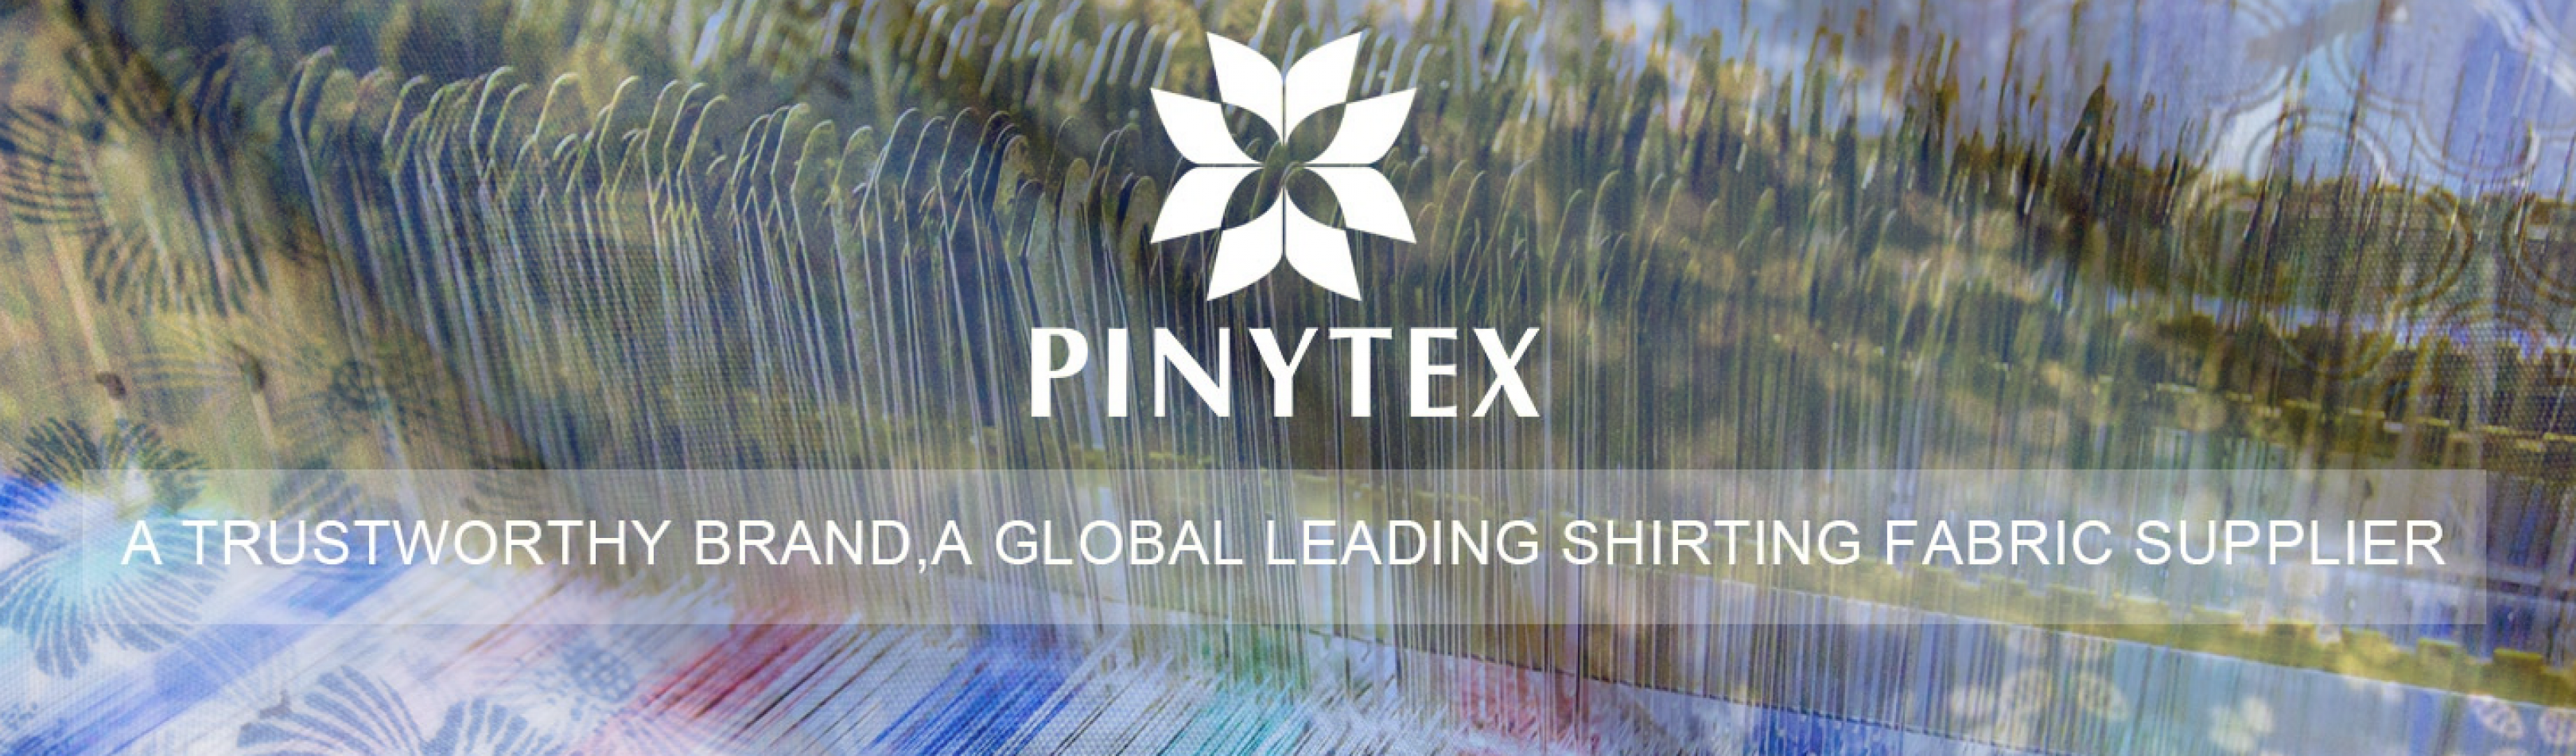 JIANGSU PINYTEX TEXTILE DYEING & FINISHING CO.,LTD